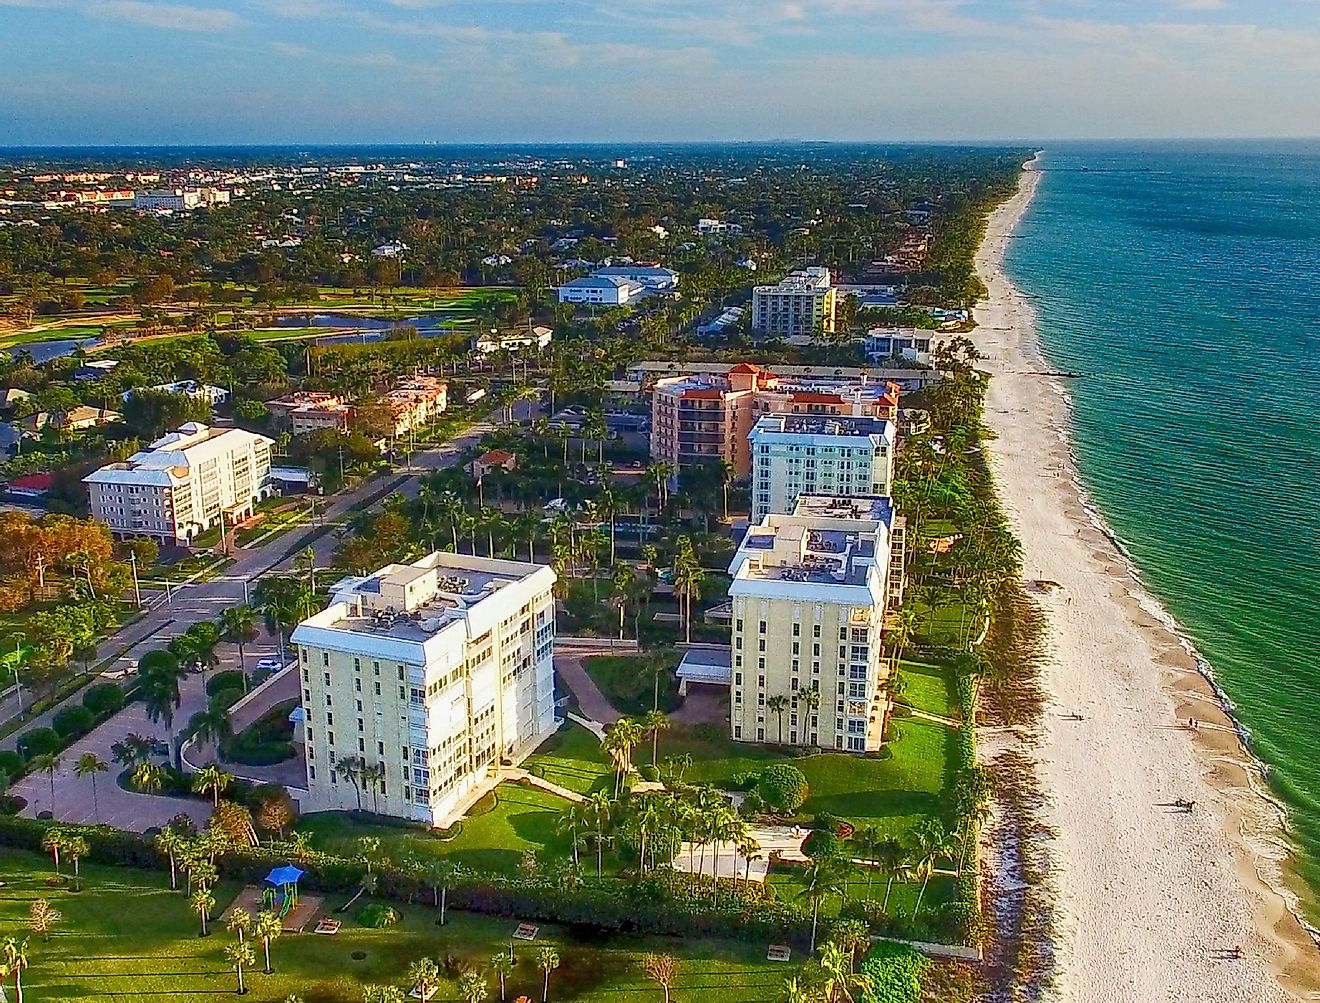 Naples coastline, Florida aerial view. Image credit pisaphotography via shutterstock